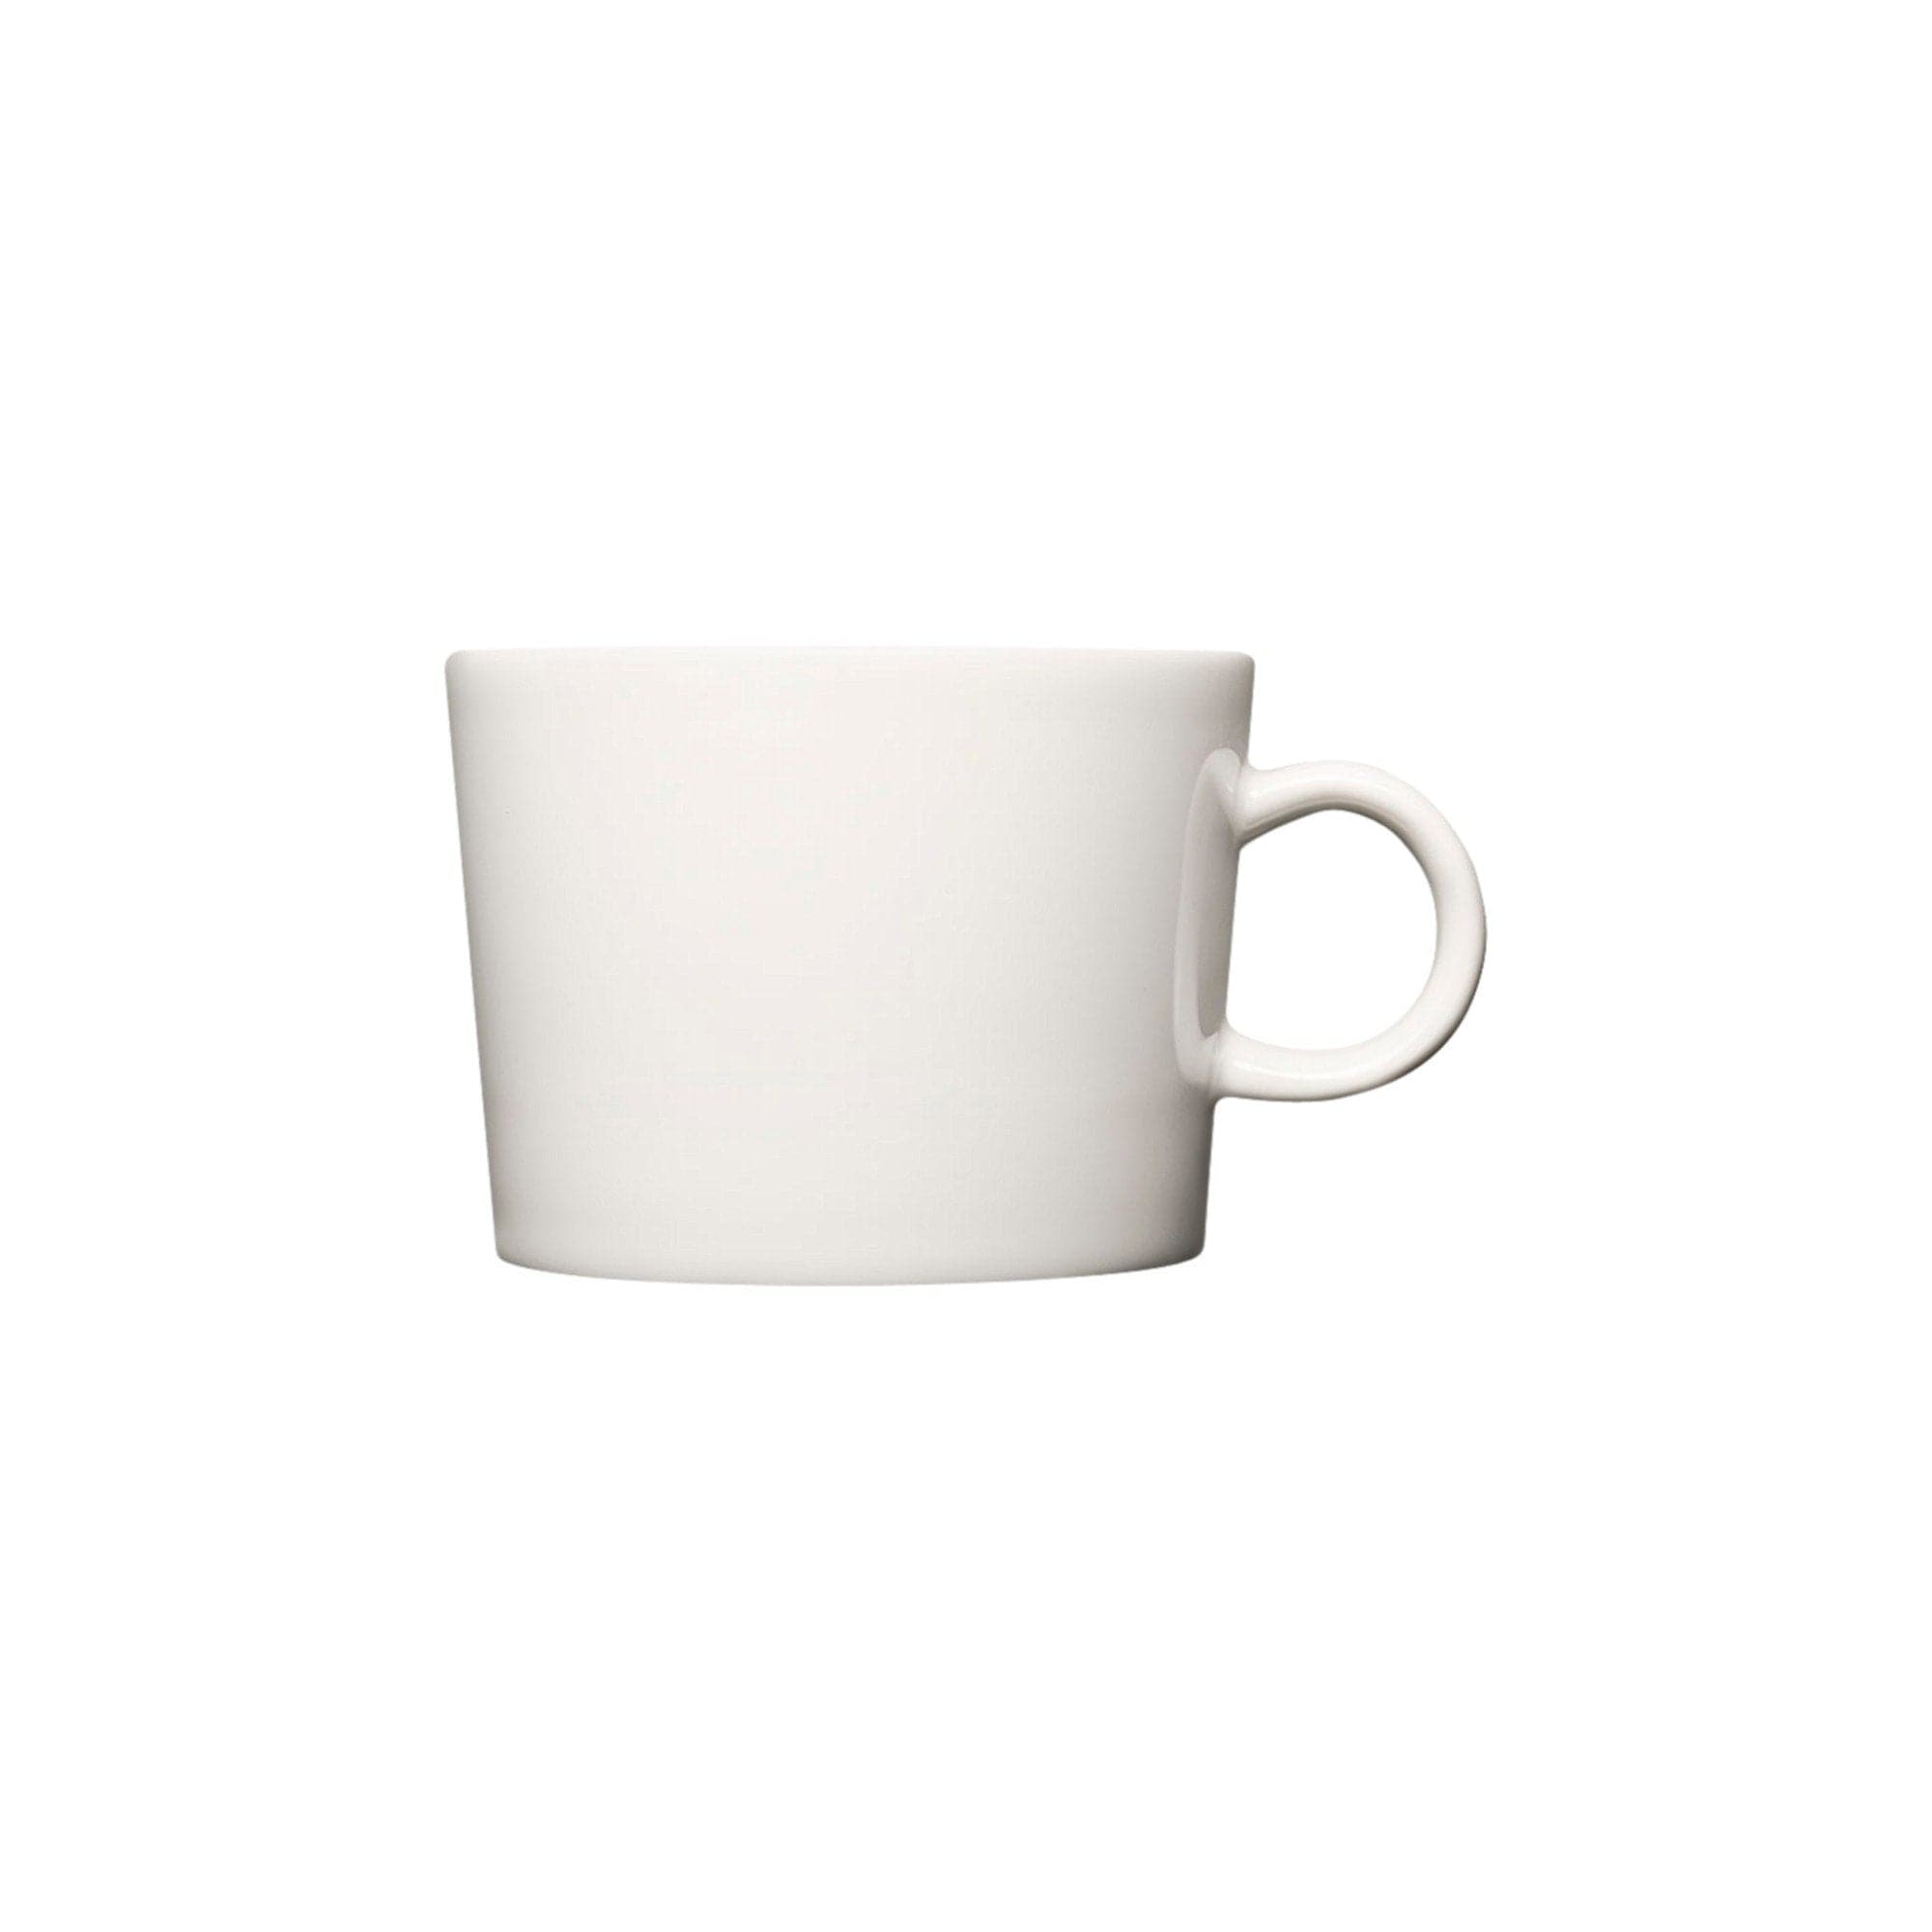 Iittala Tasse de café teema blanc, 0,22 L